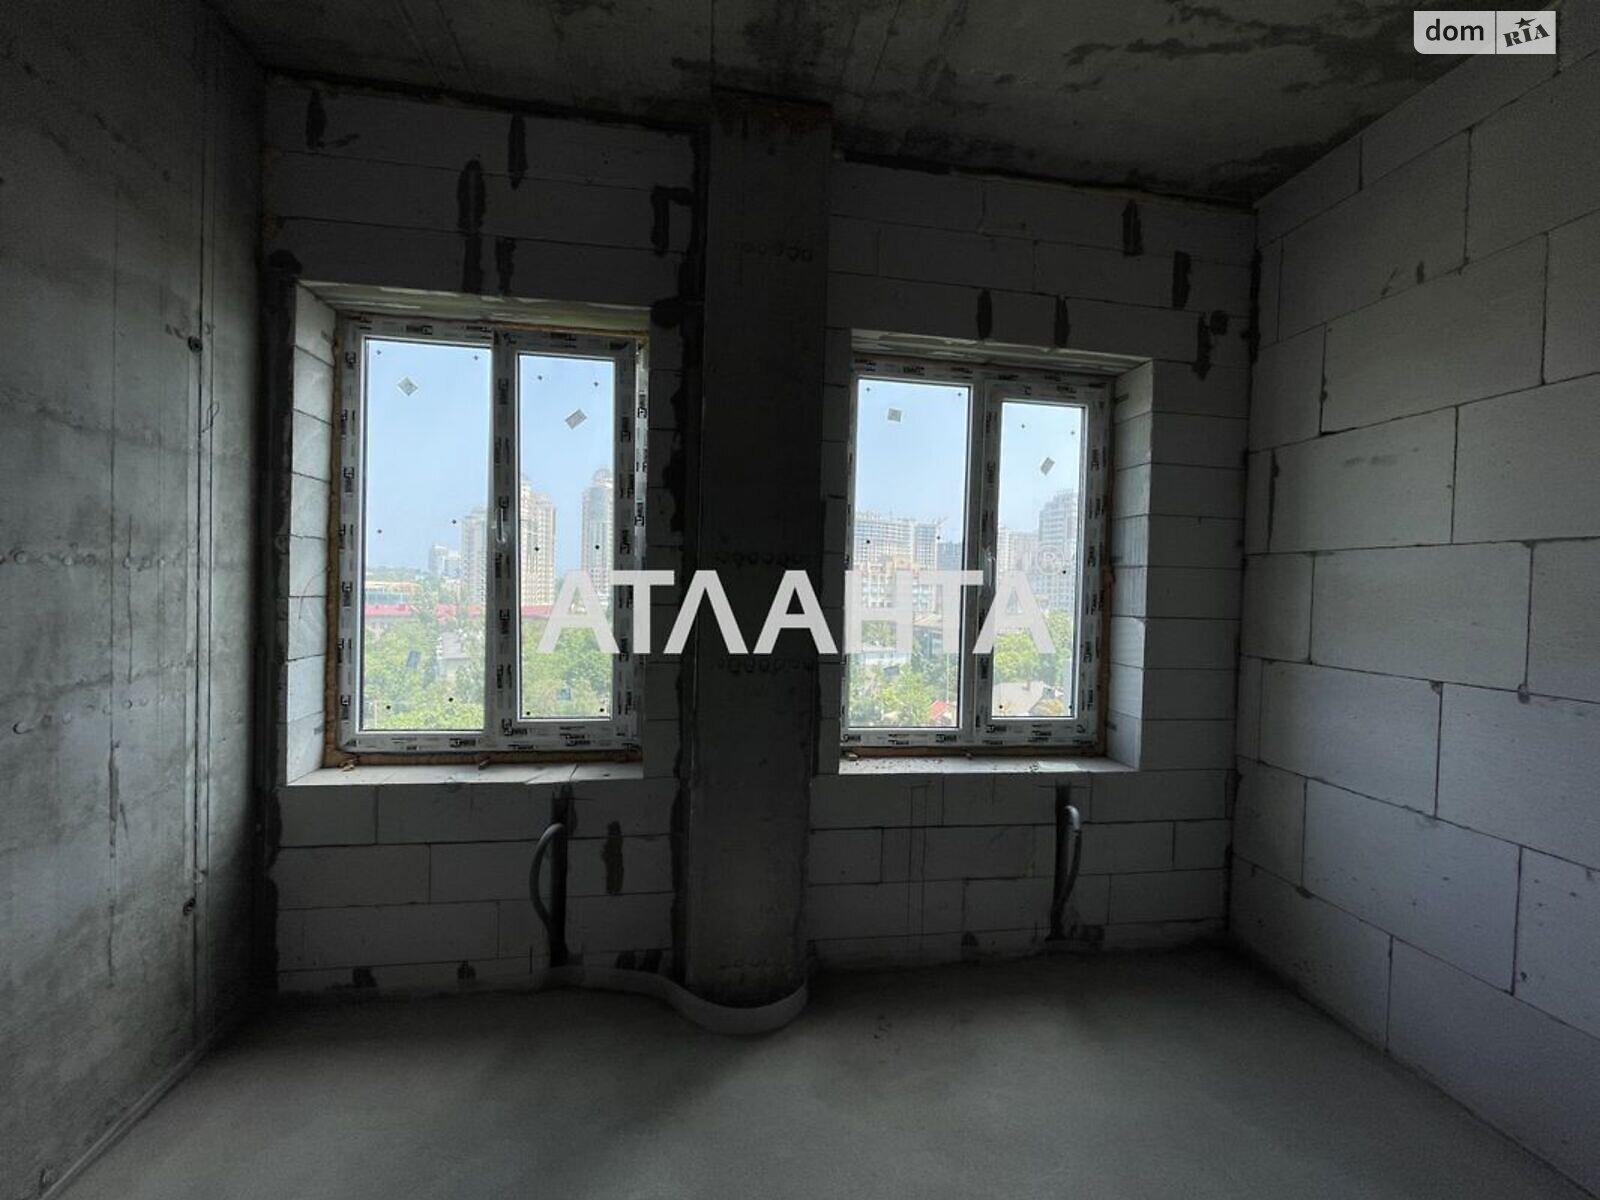 Продажа трехкомнатной квартиры в Одессе, на ул. Солнечная 4Б, район Аркадия фото 1